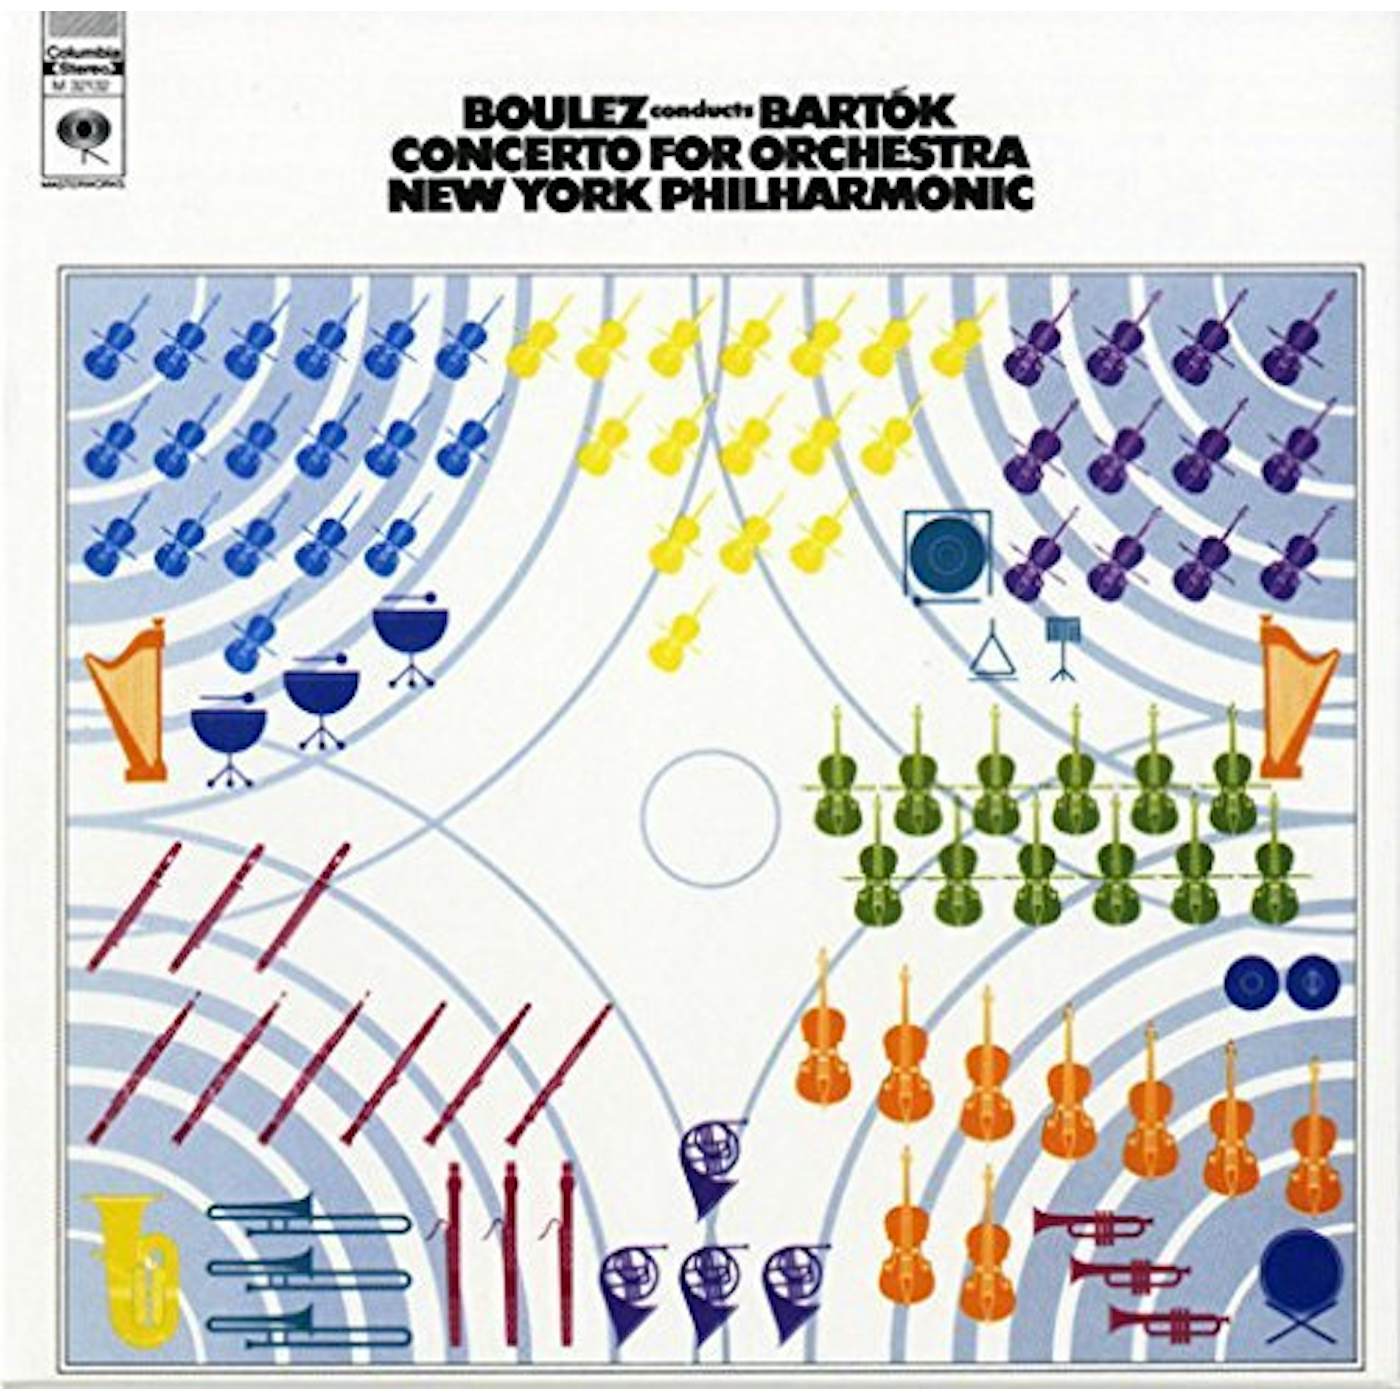 Pierre Boulez BARTOK: CONCERTO FOR ORCHESTRA CD